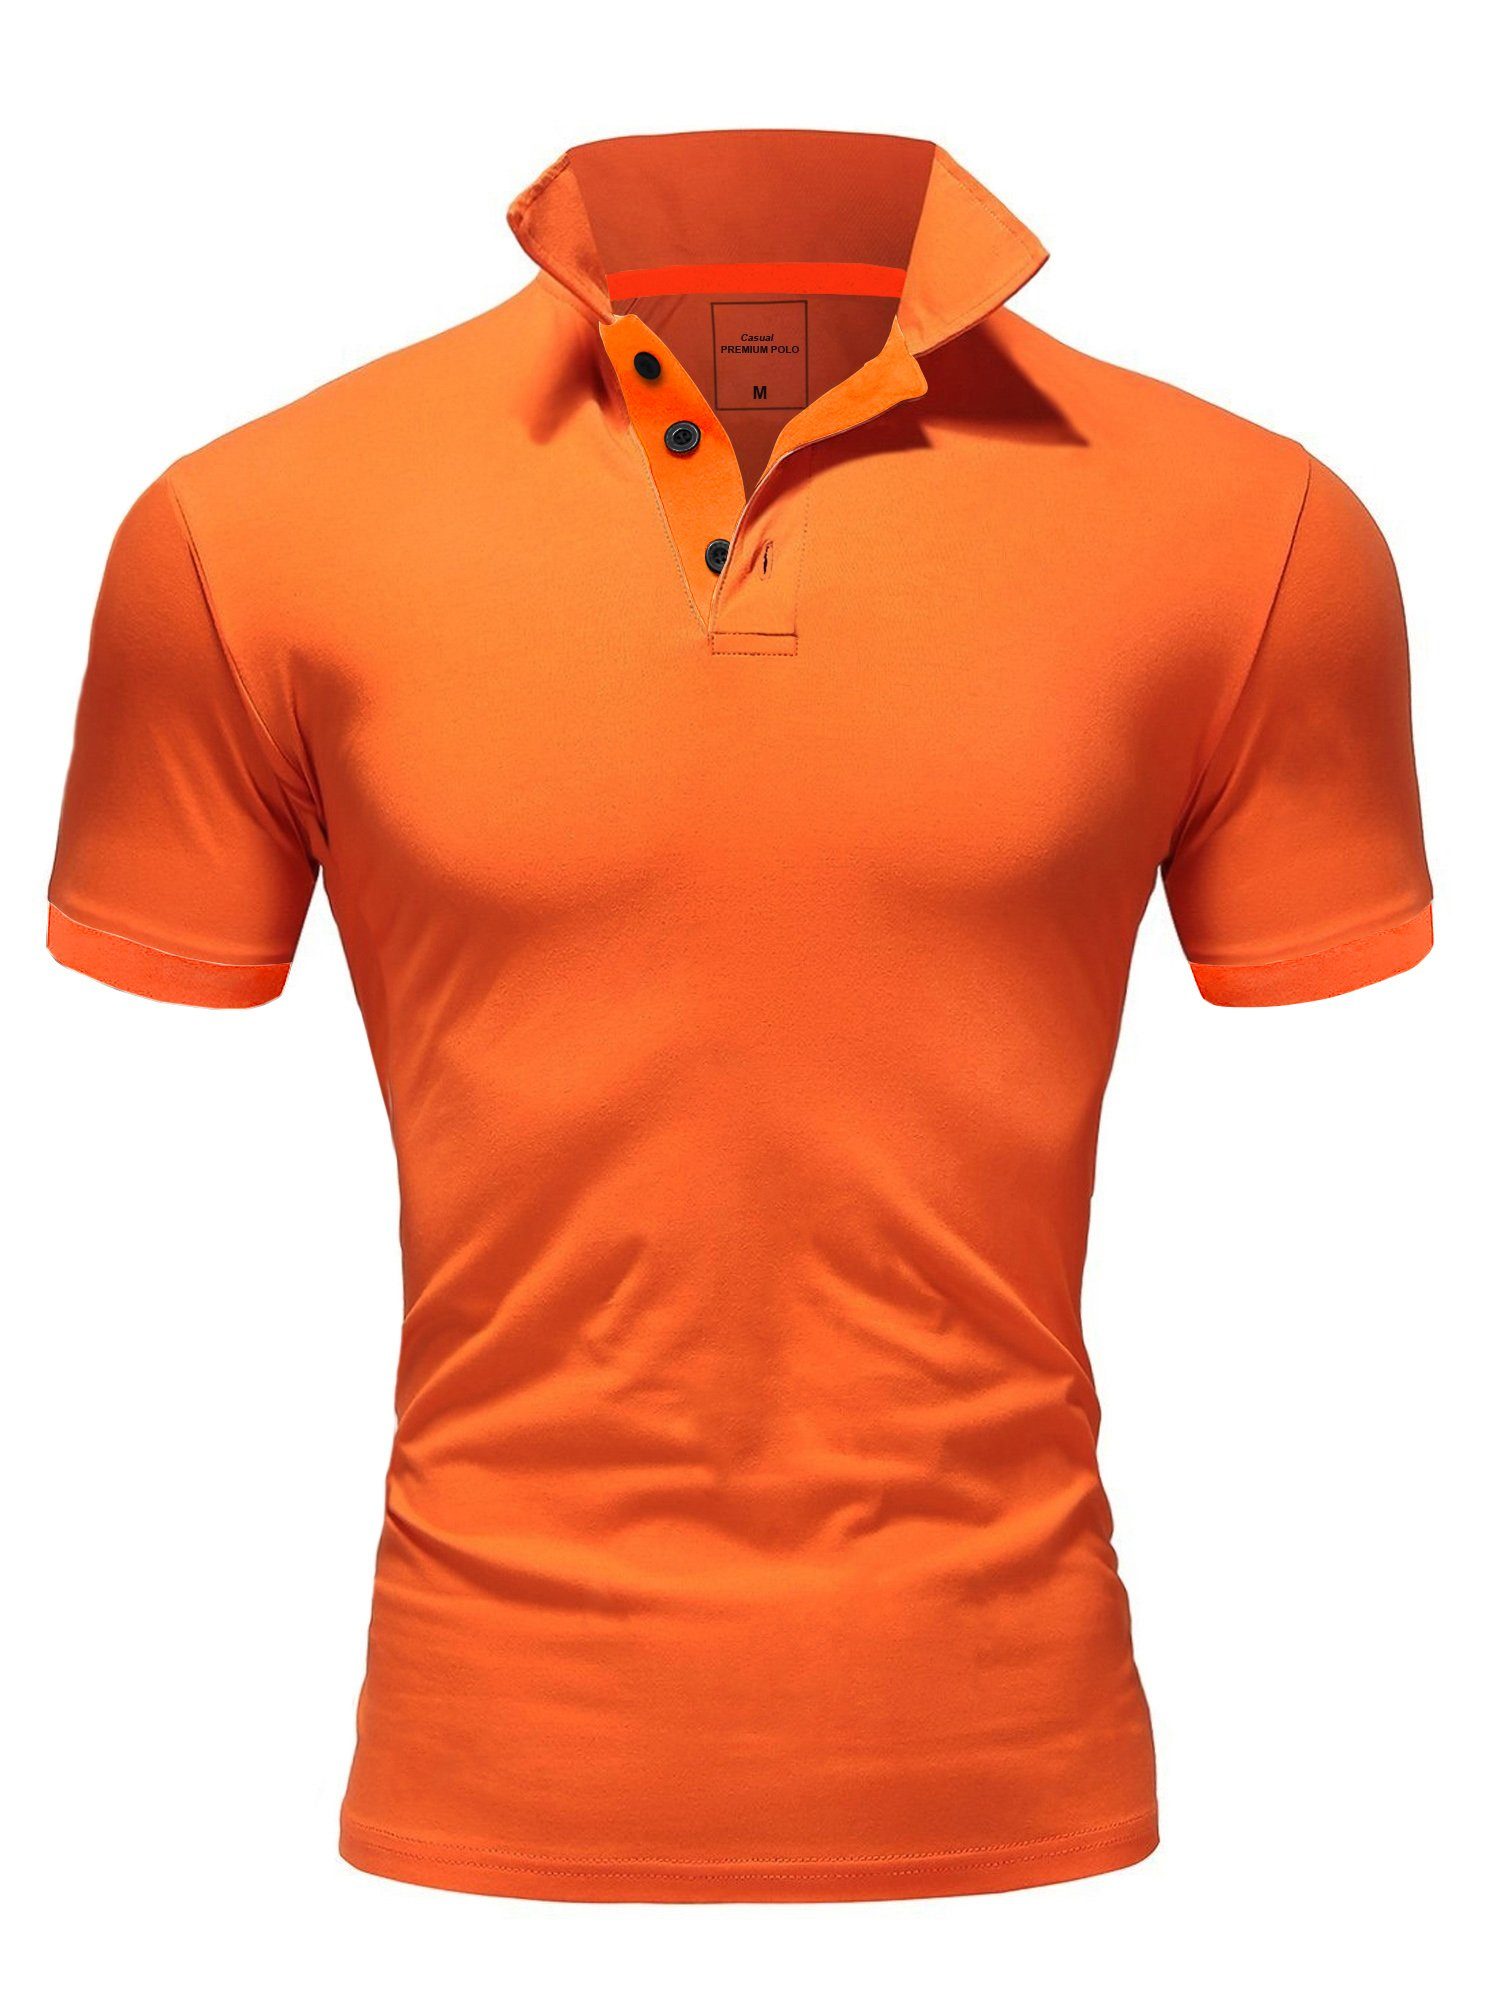 MAINE Orange Poloshirt Basic Kurzarm Amaci&Sons Poloshirt